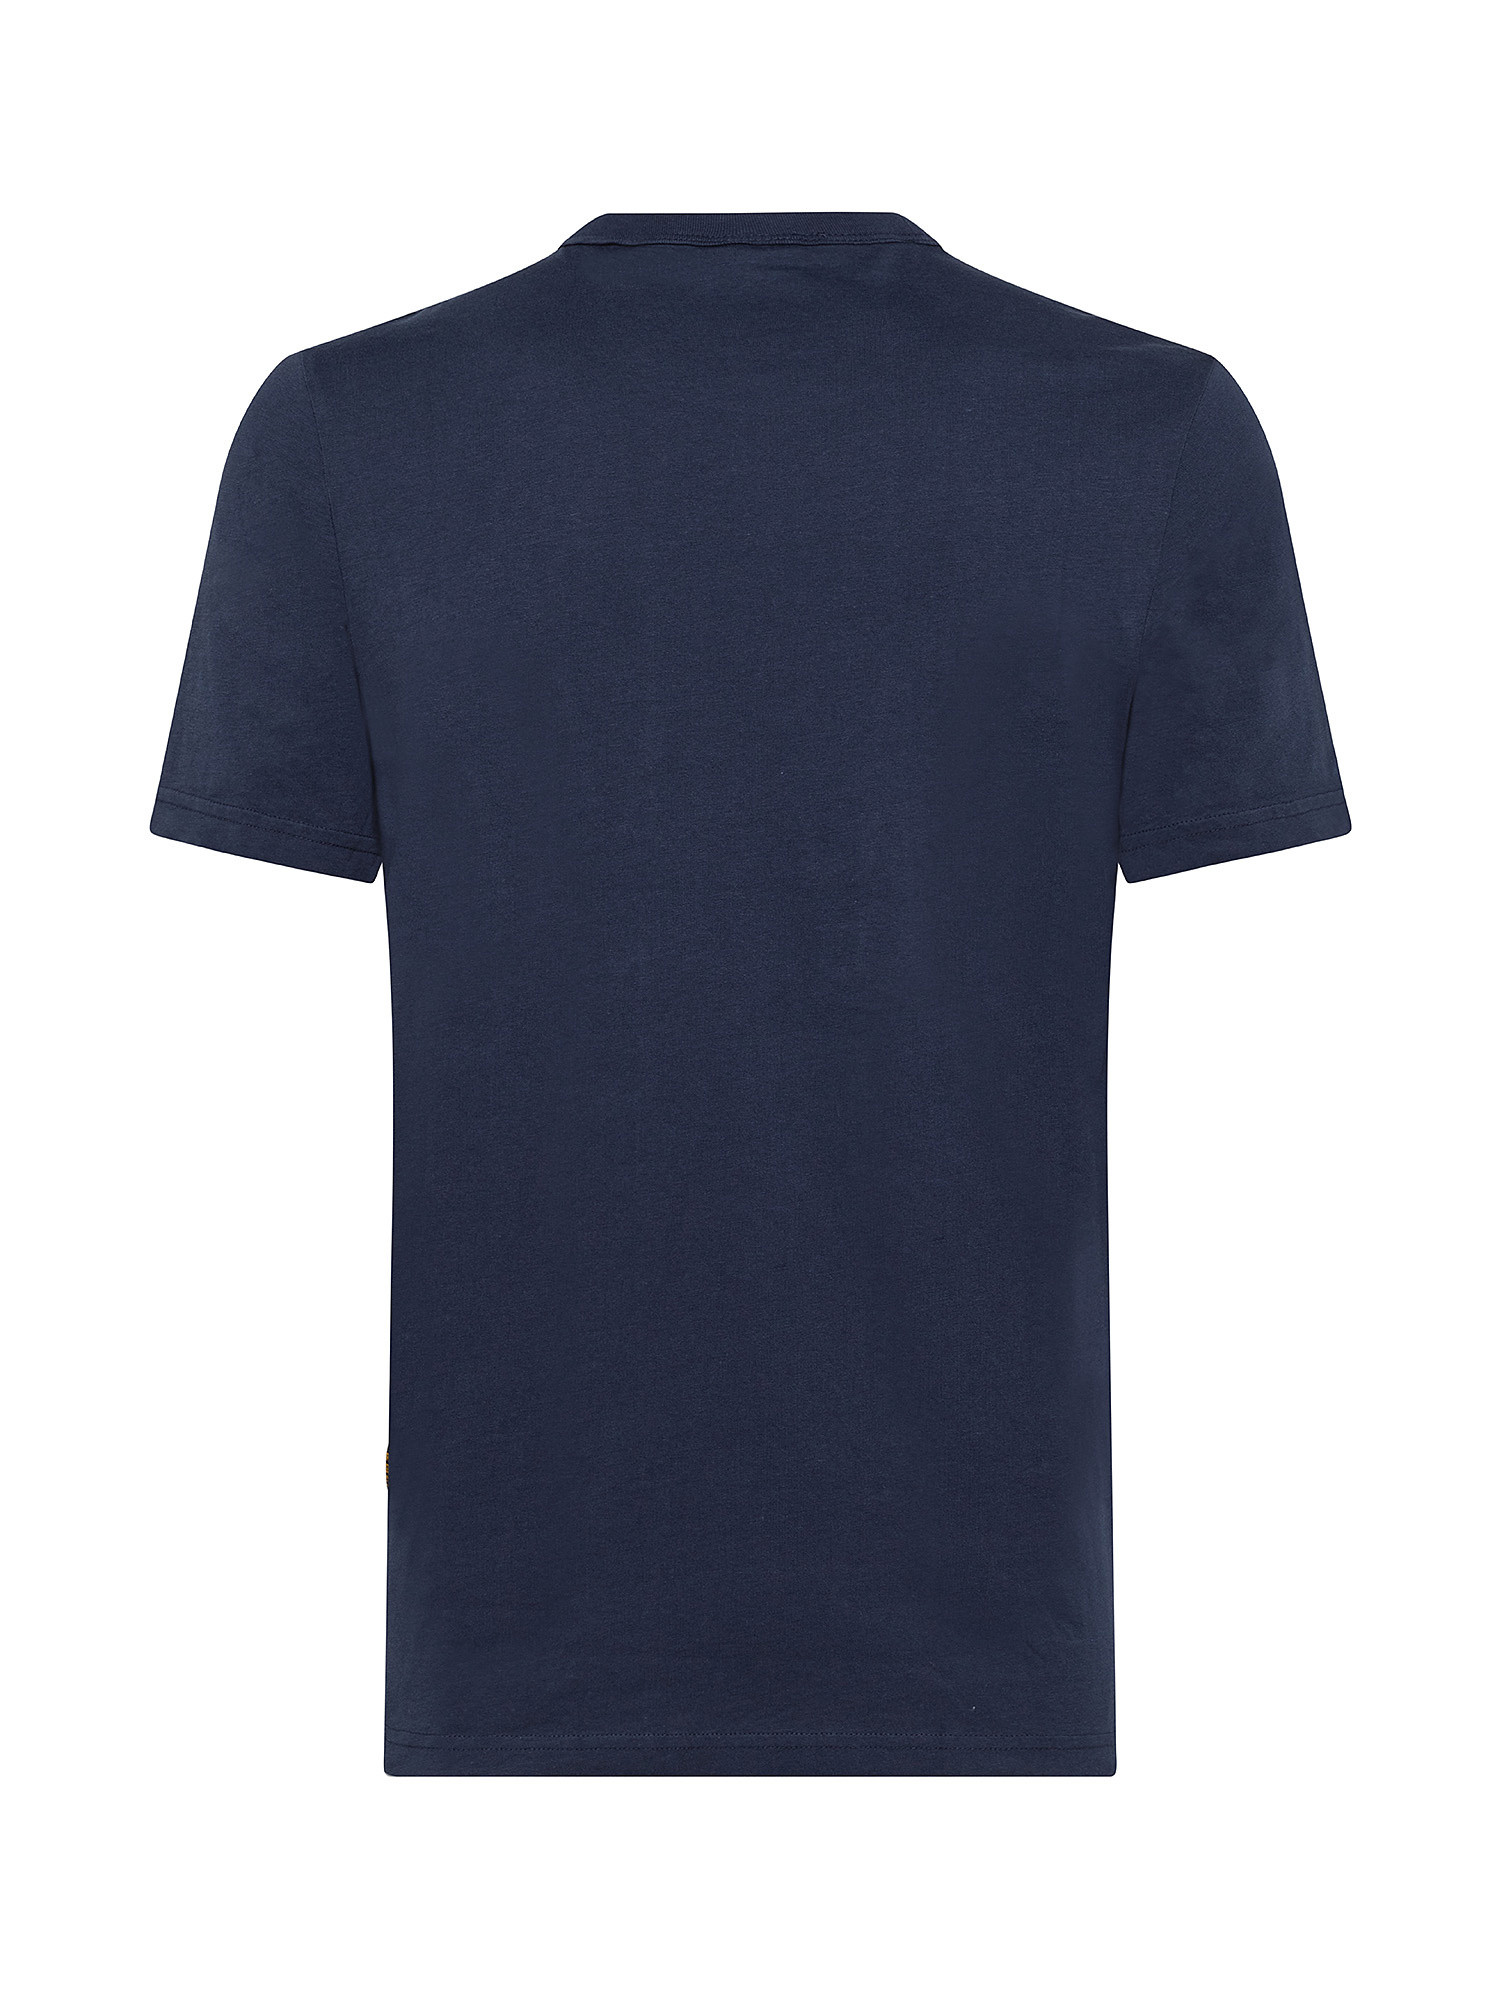 Graphic 4 t-shirt, Blu, large image number 1